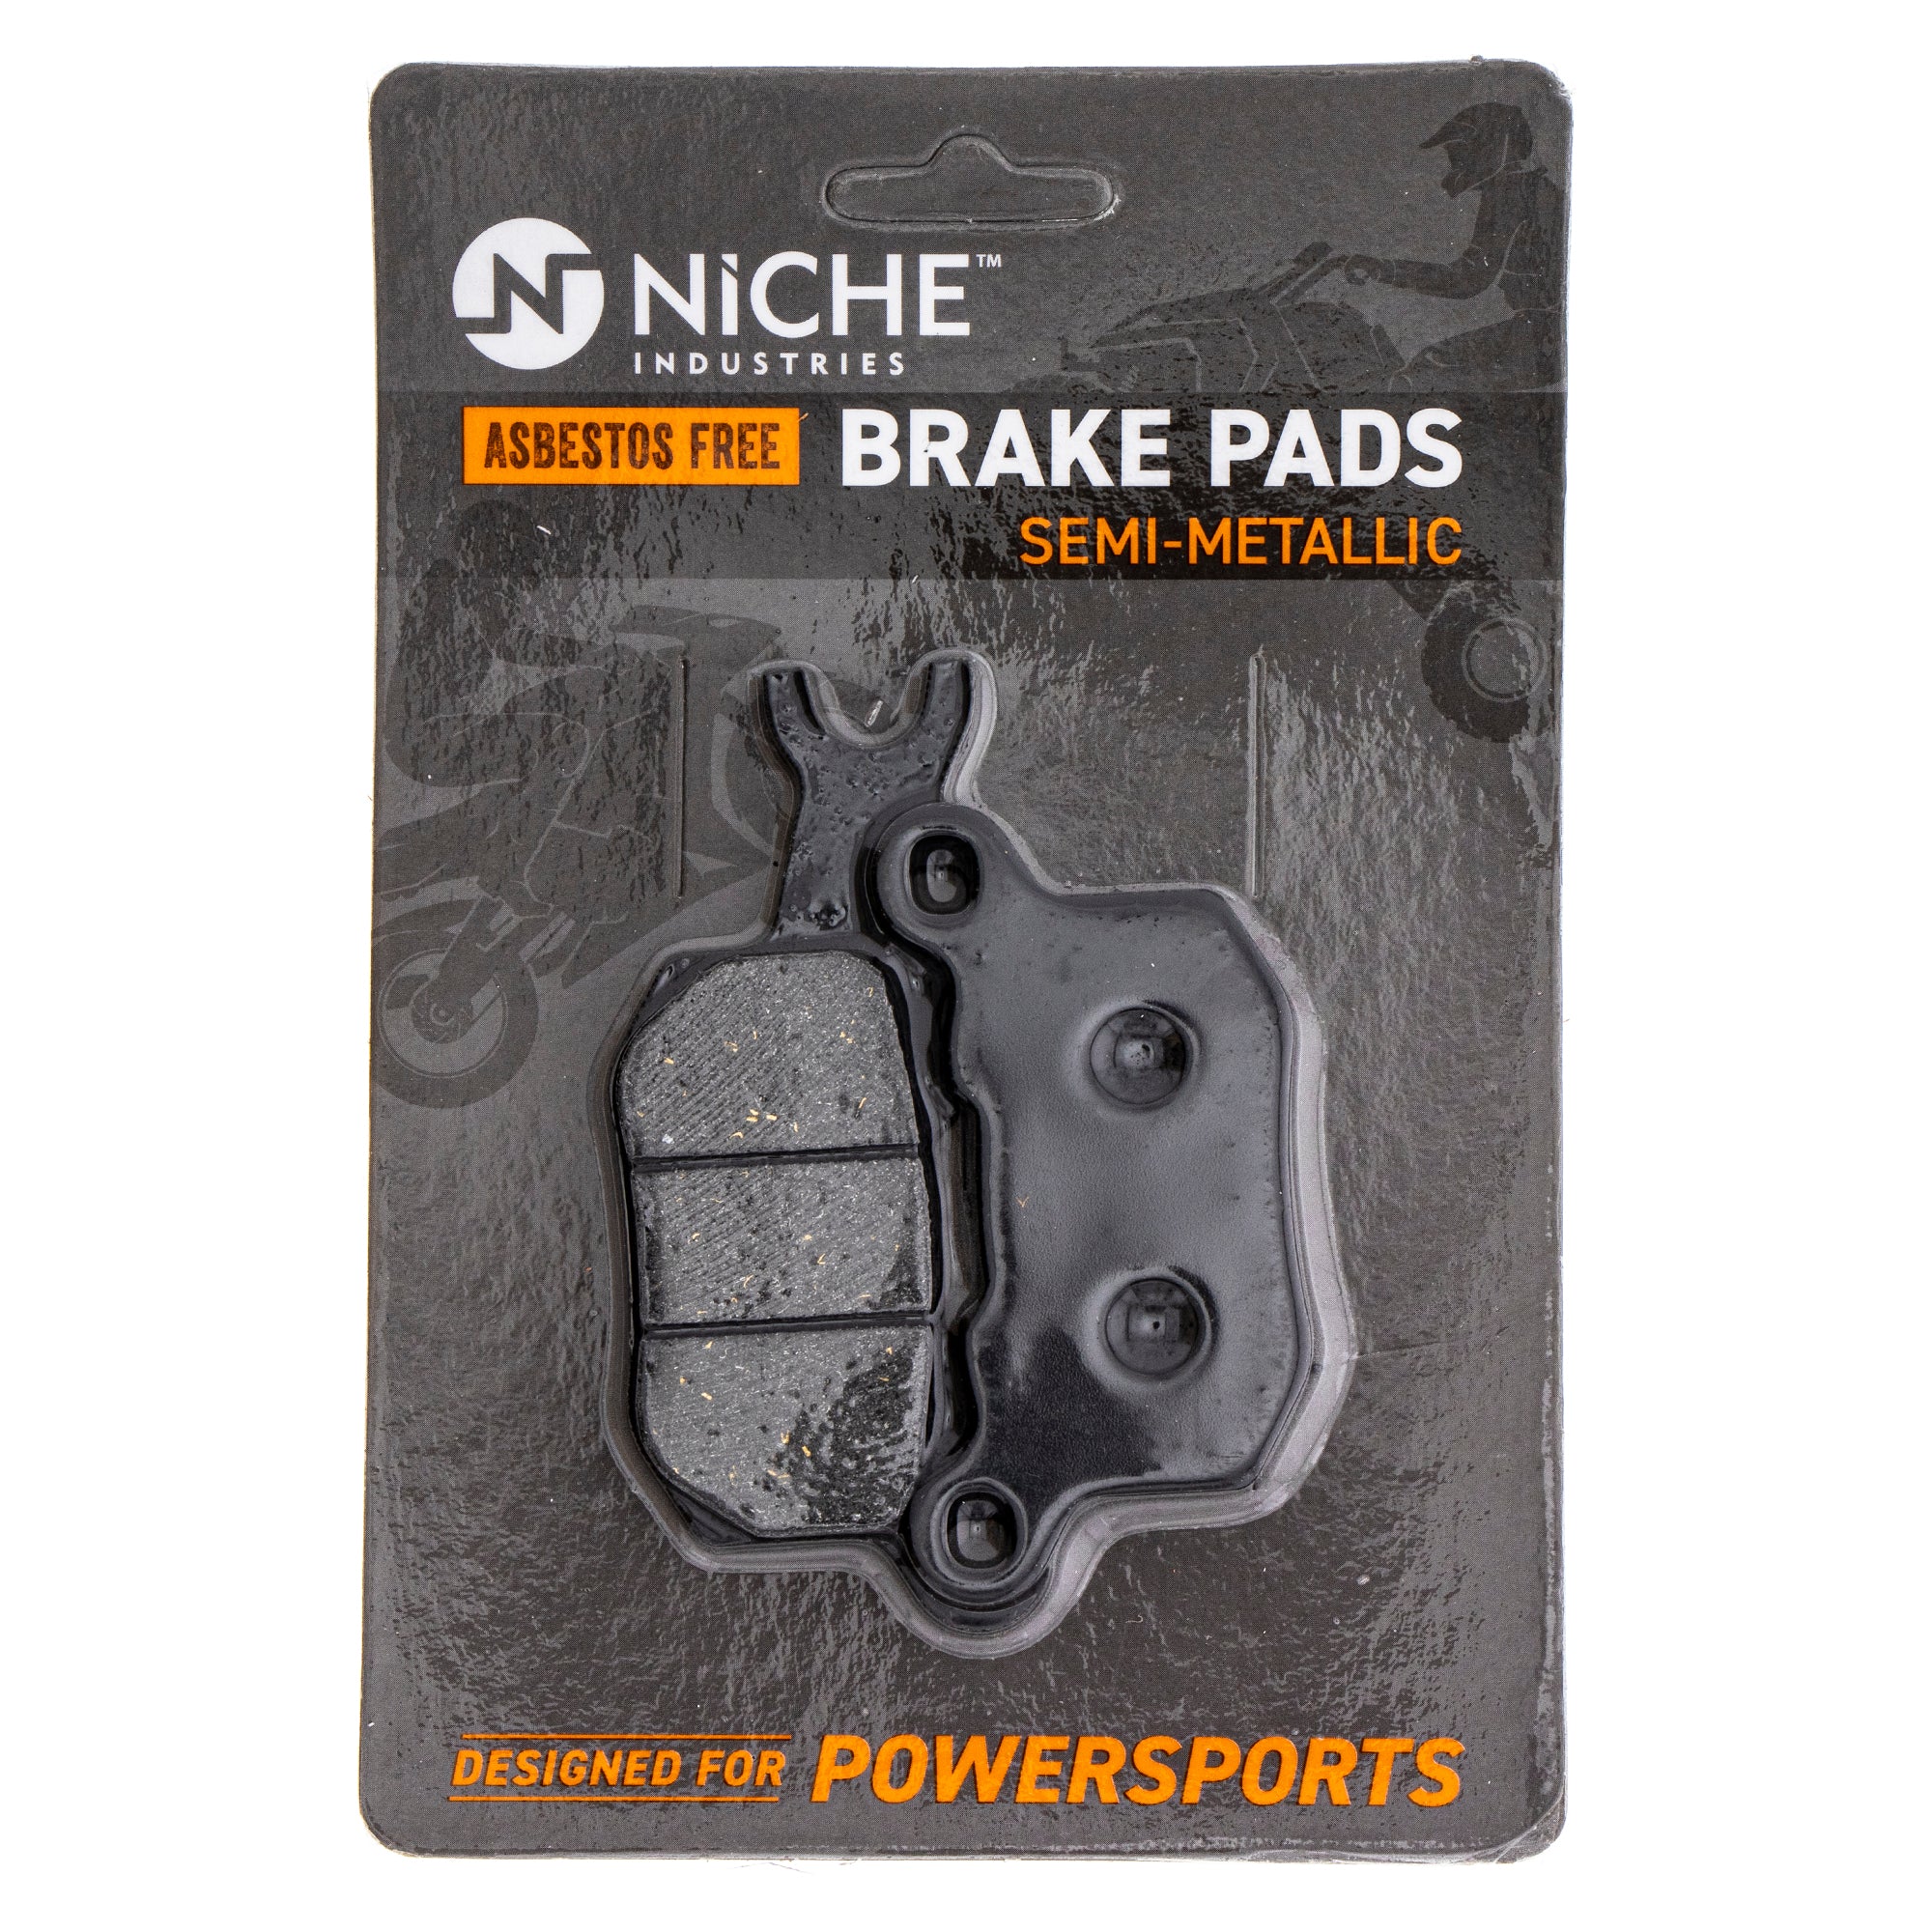 Semi-Metallic Brake Pads for BRP Can-Am Ski-Doo Sea-Doo Traxter Defender 715900382 NICHE 519-KPA2342D